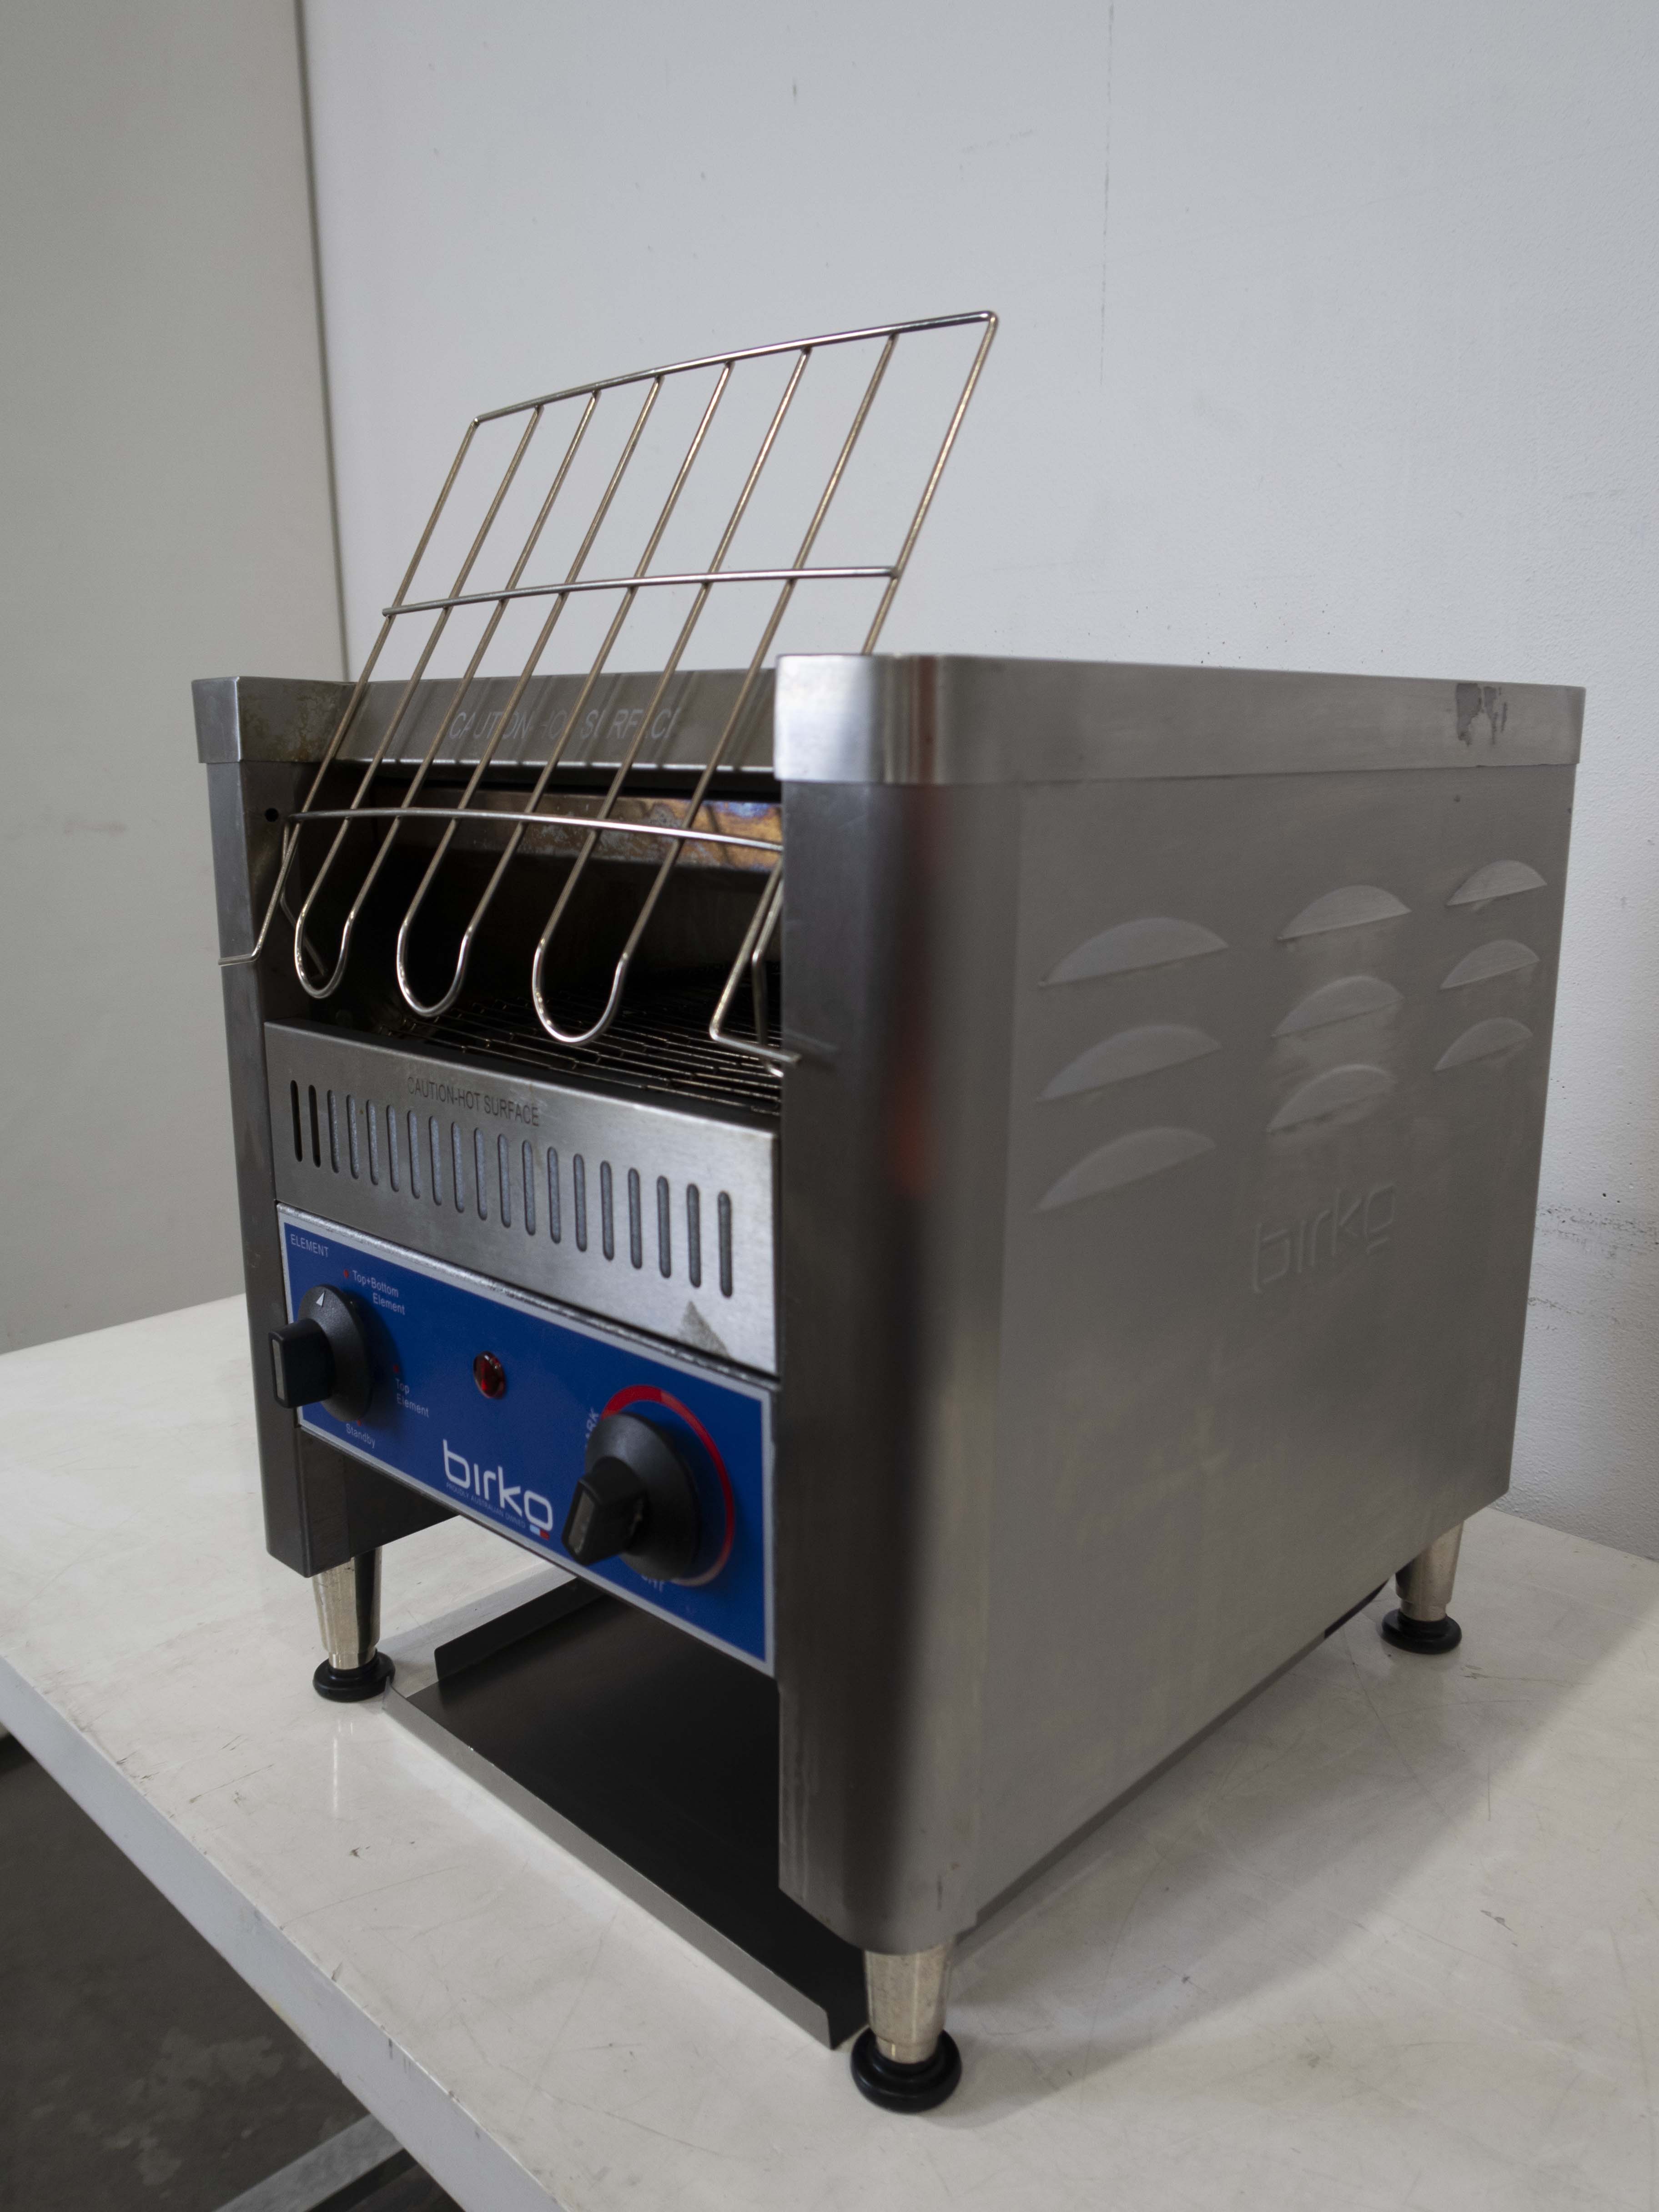 Thumbnail - Birko 1003202 Conveyeor Toaster